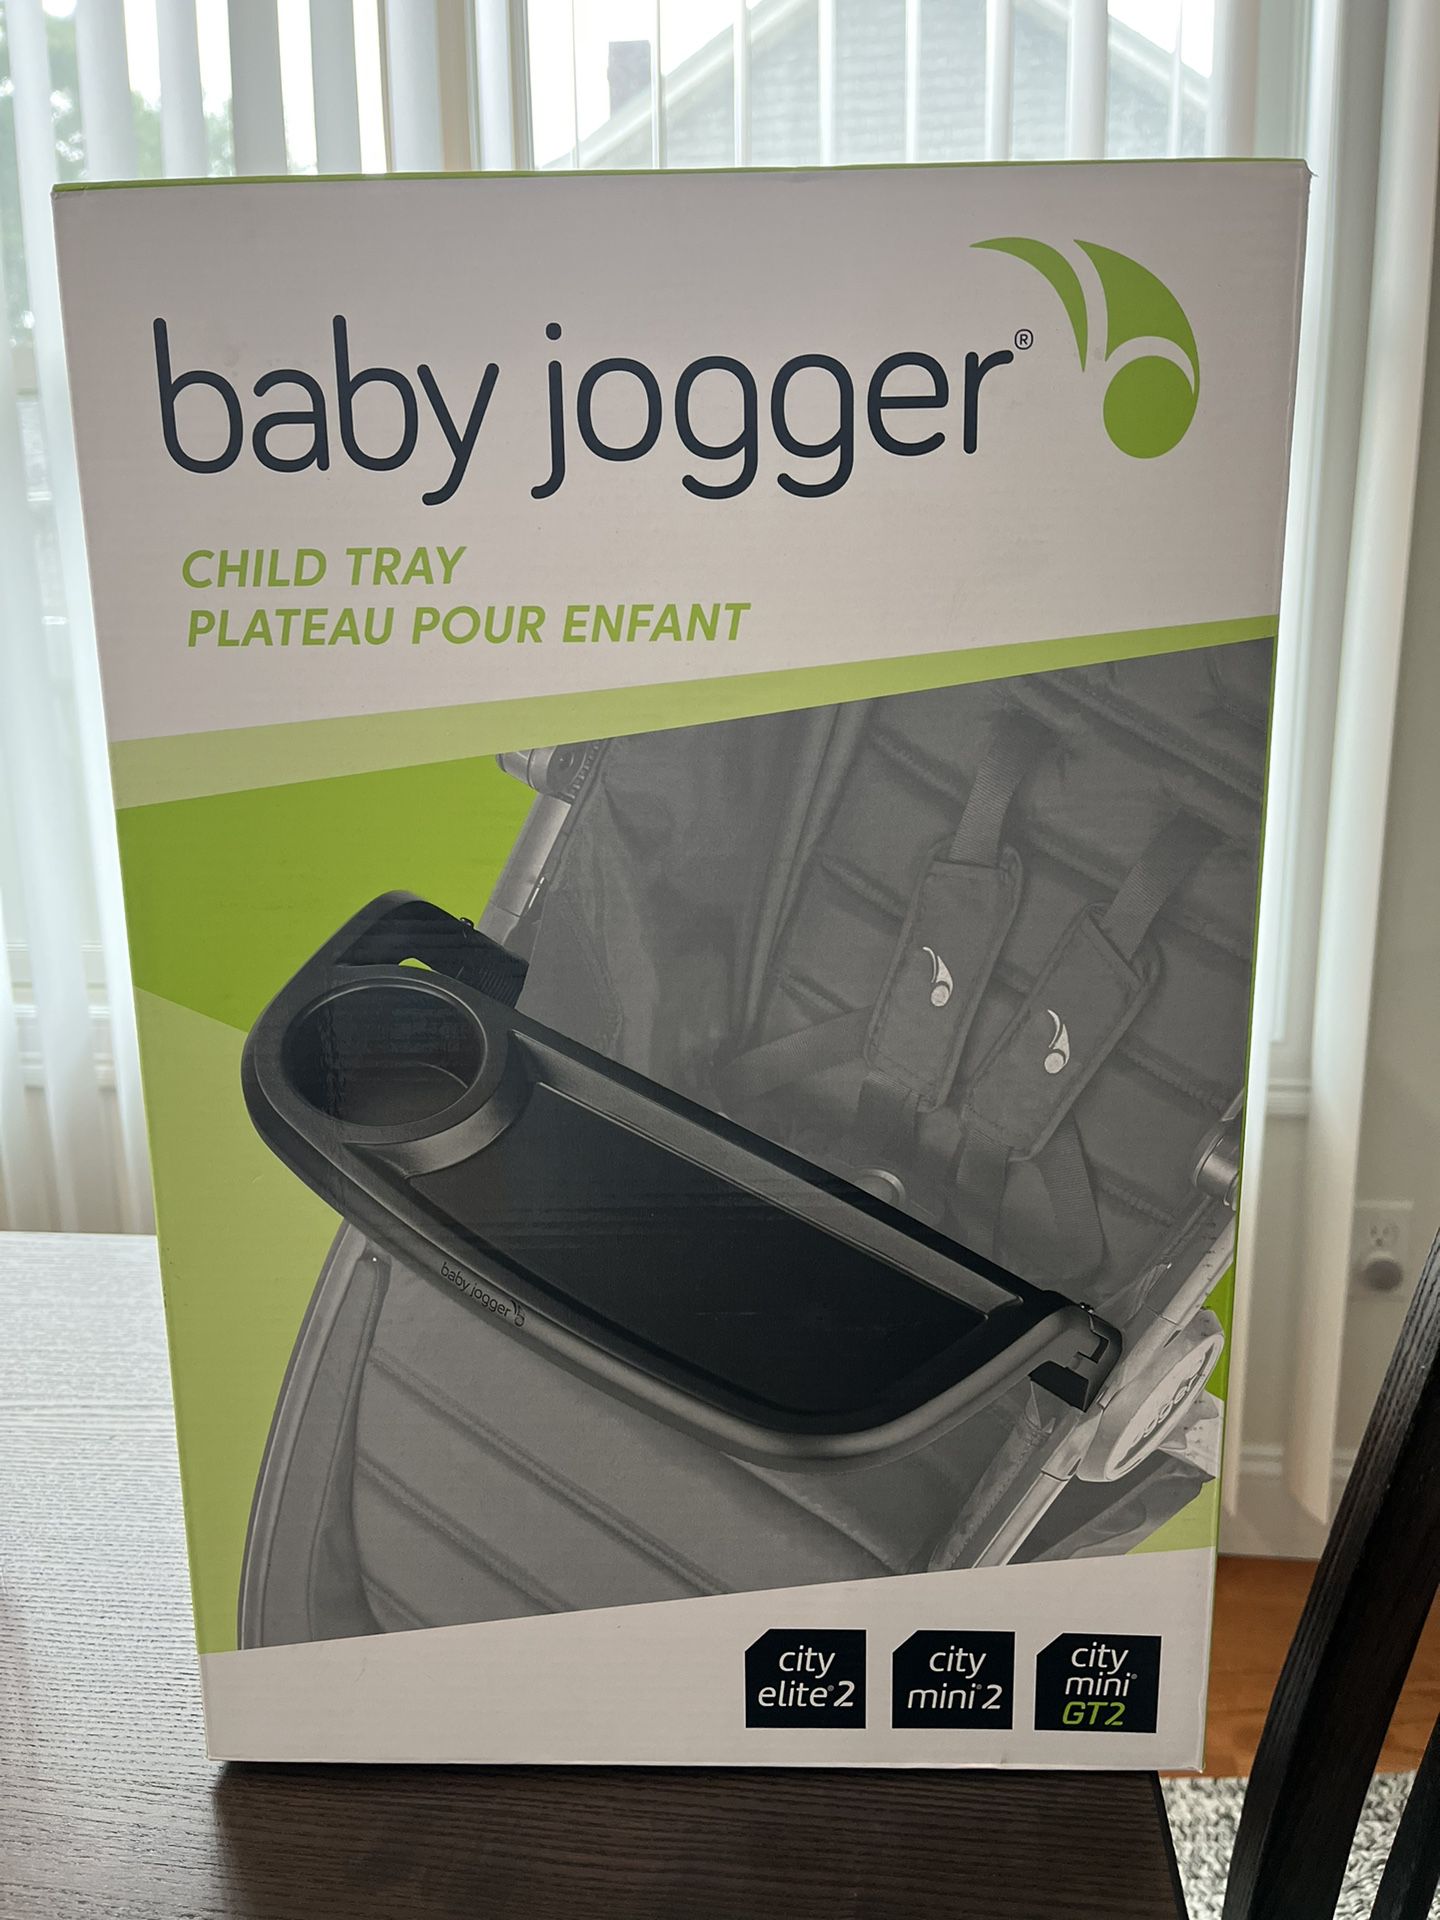 Baby Jogger Child Tray New In Box